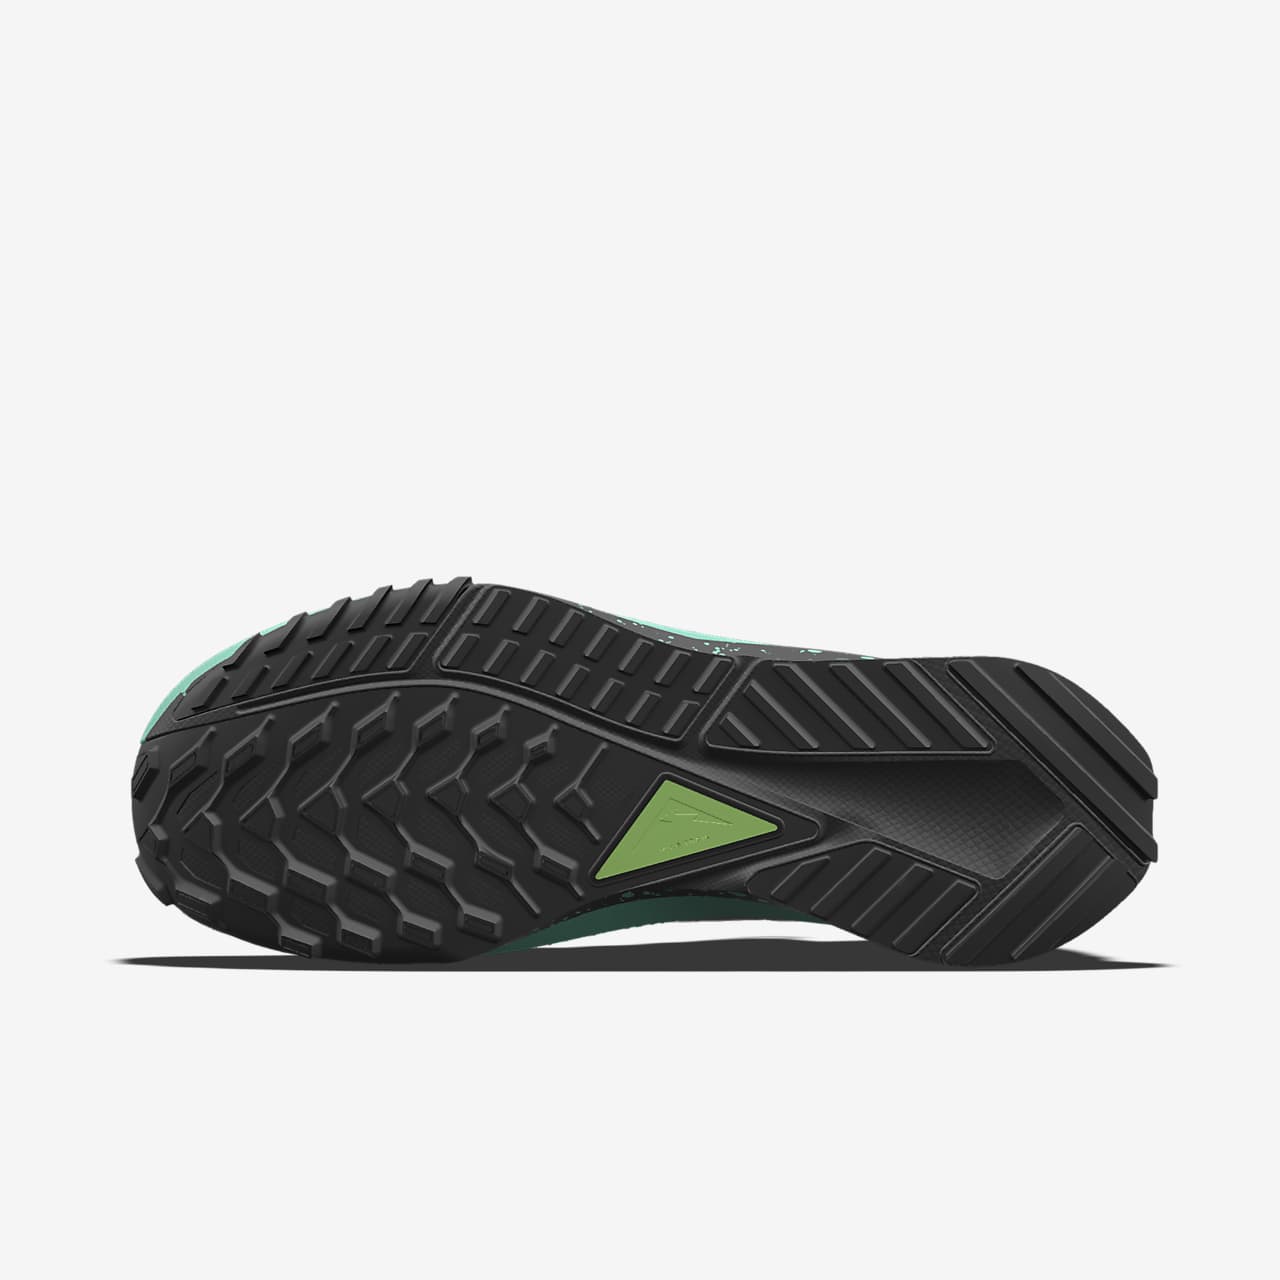 The Best Waterproof Shoes for Men by Nike. Nike LU